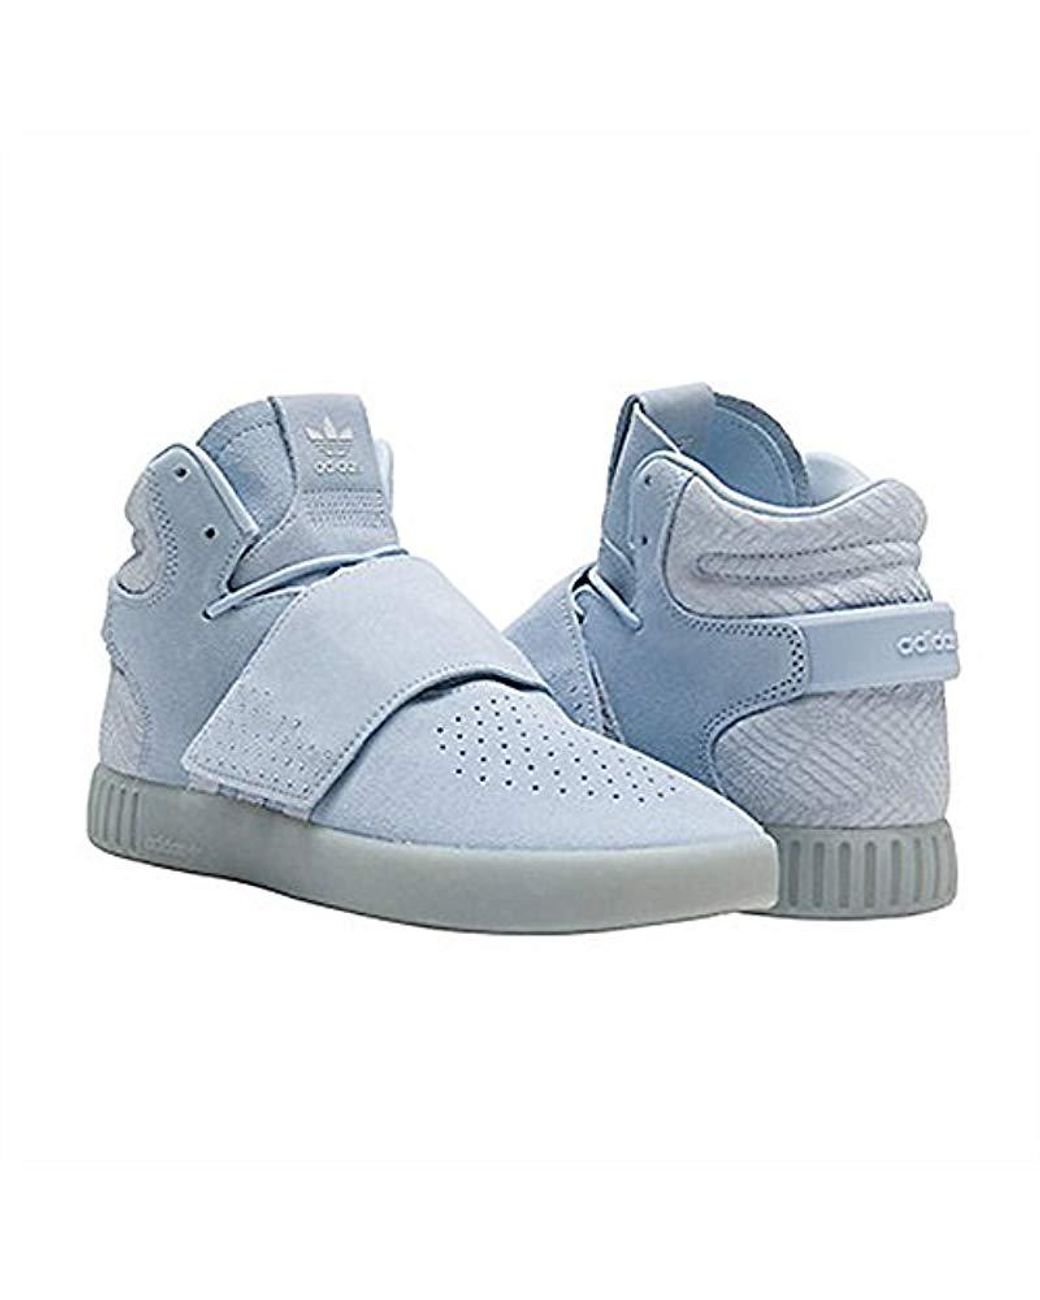 adidas Originals Tubular Invader Strap Shoes in Blue | Lyst